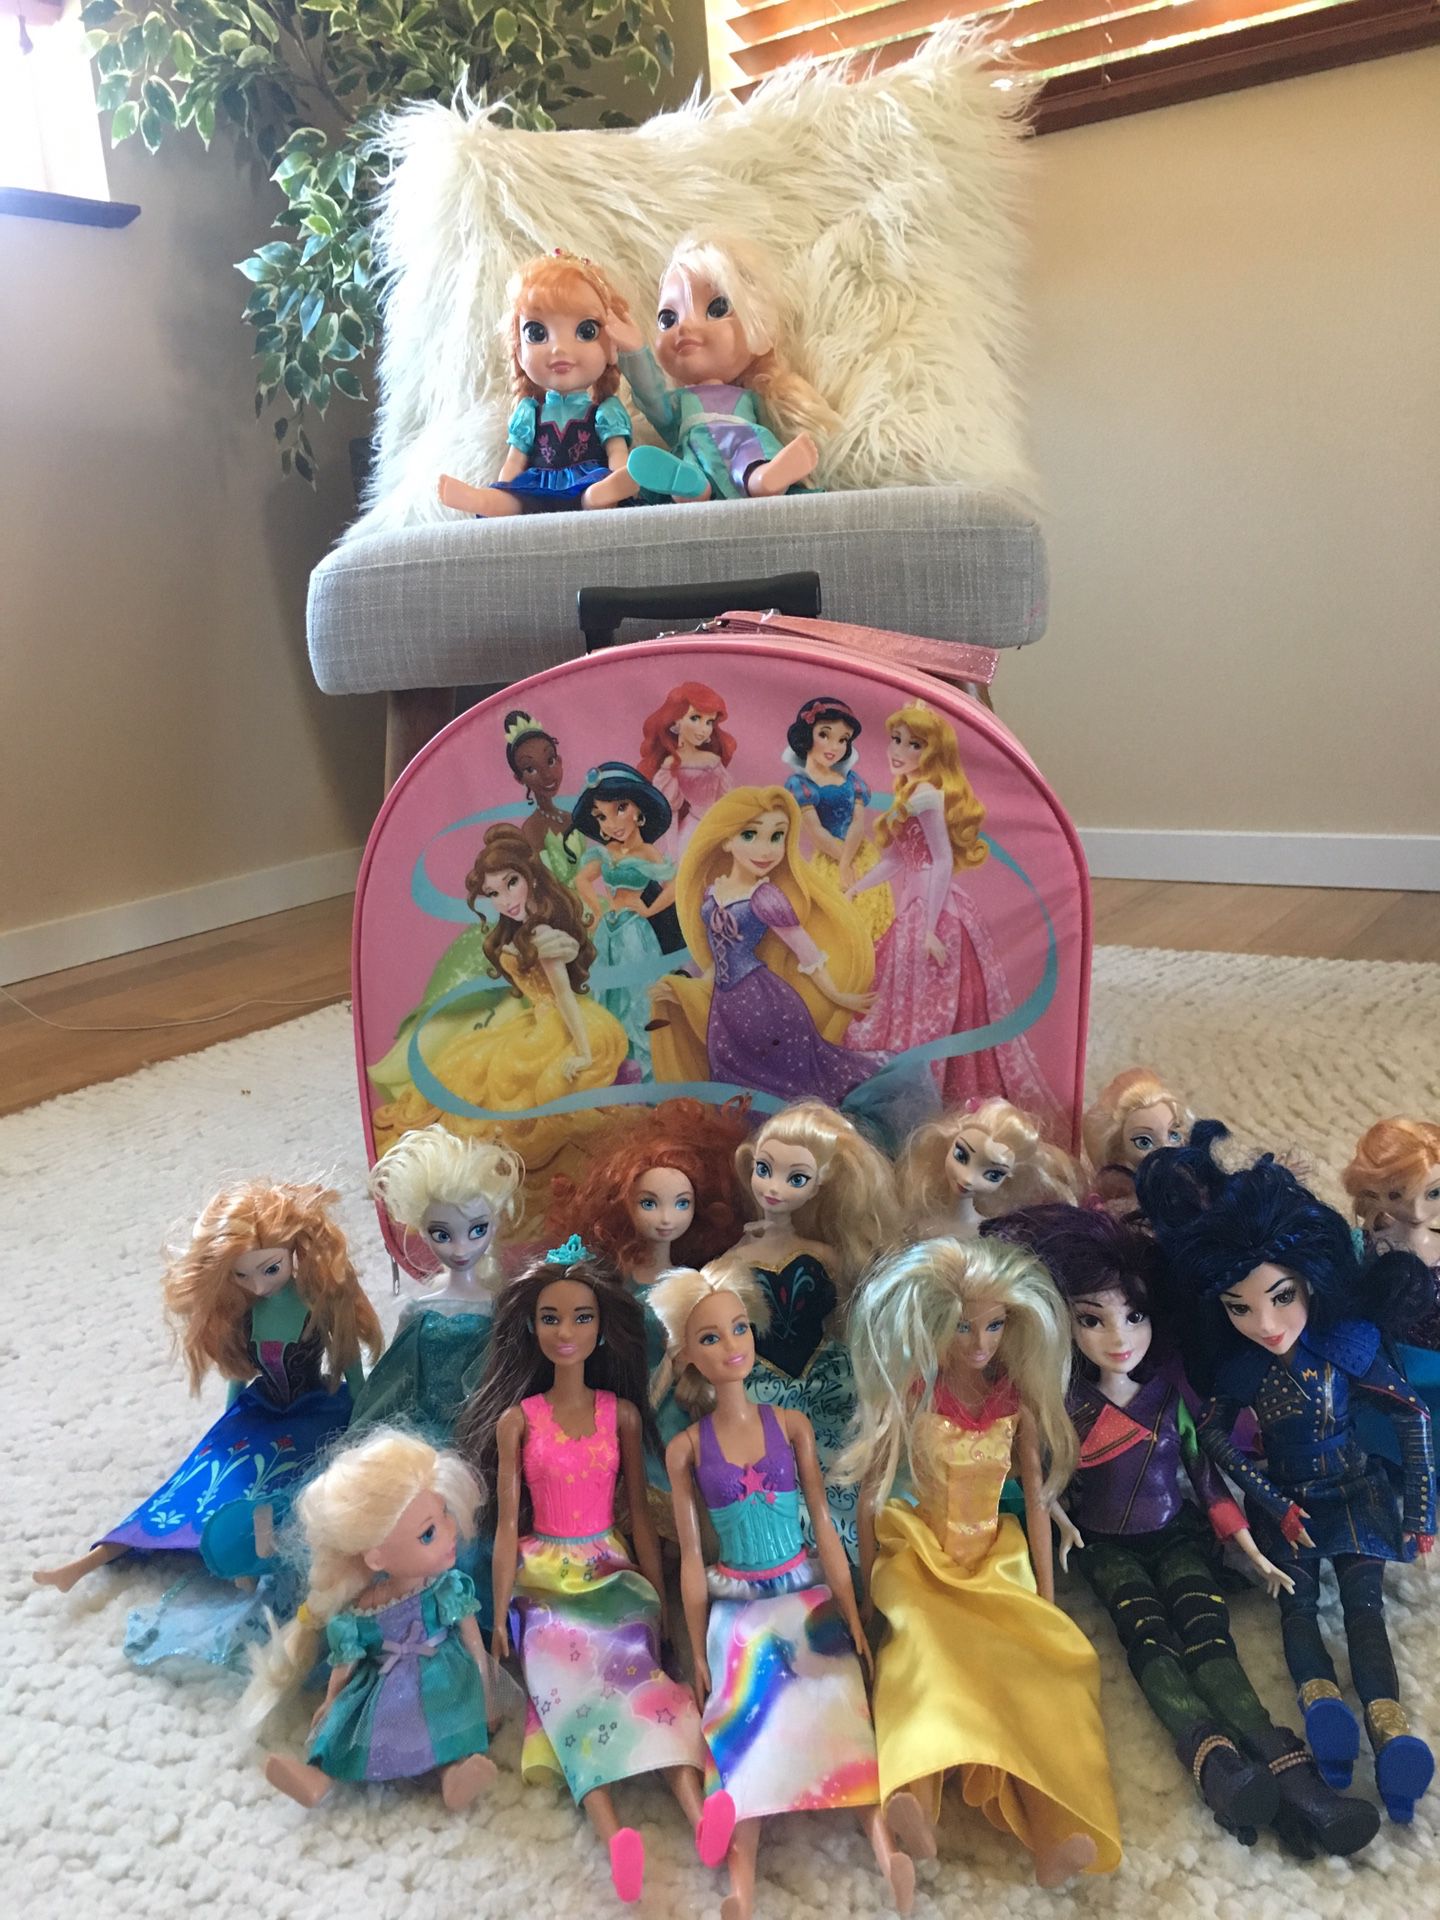 Disney princess dolls, luggage, & more